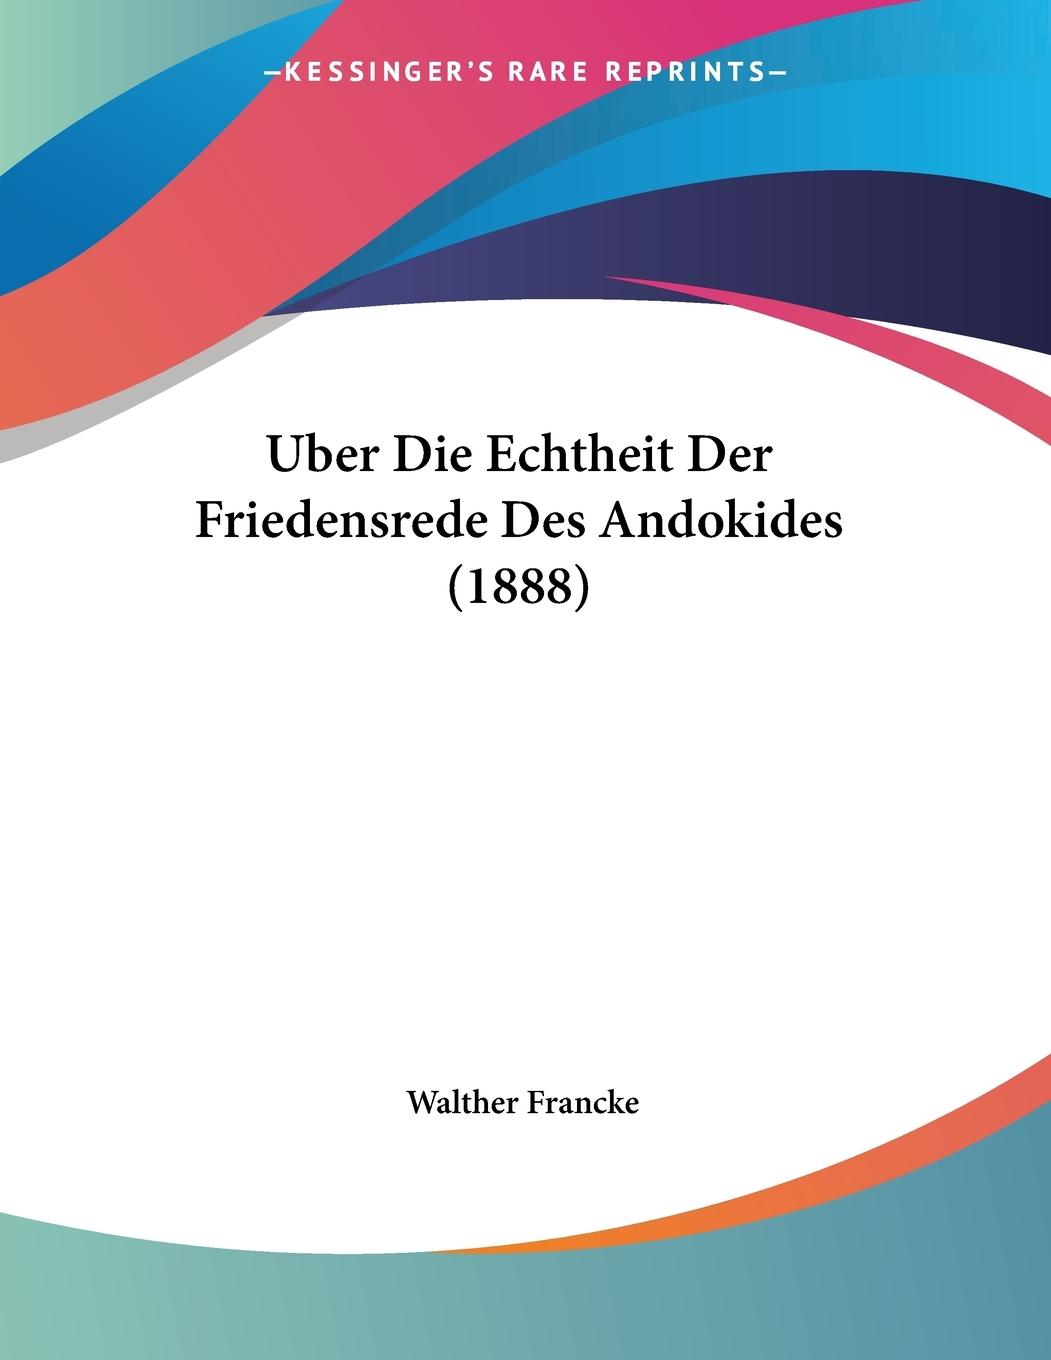 Uber Die Echtheit Der Friedensrede Des Andokides (1888) - Francke, Walther